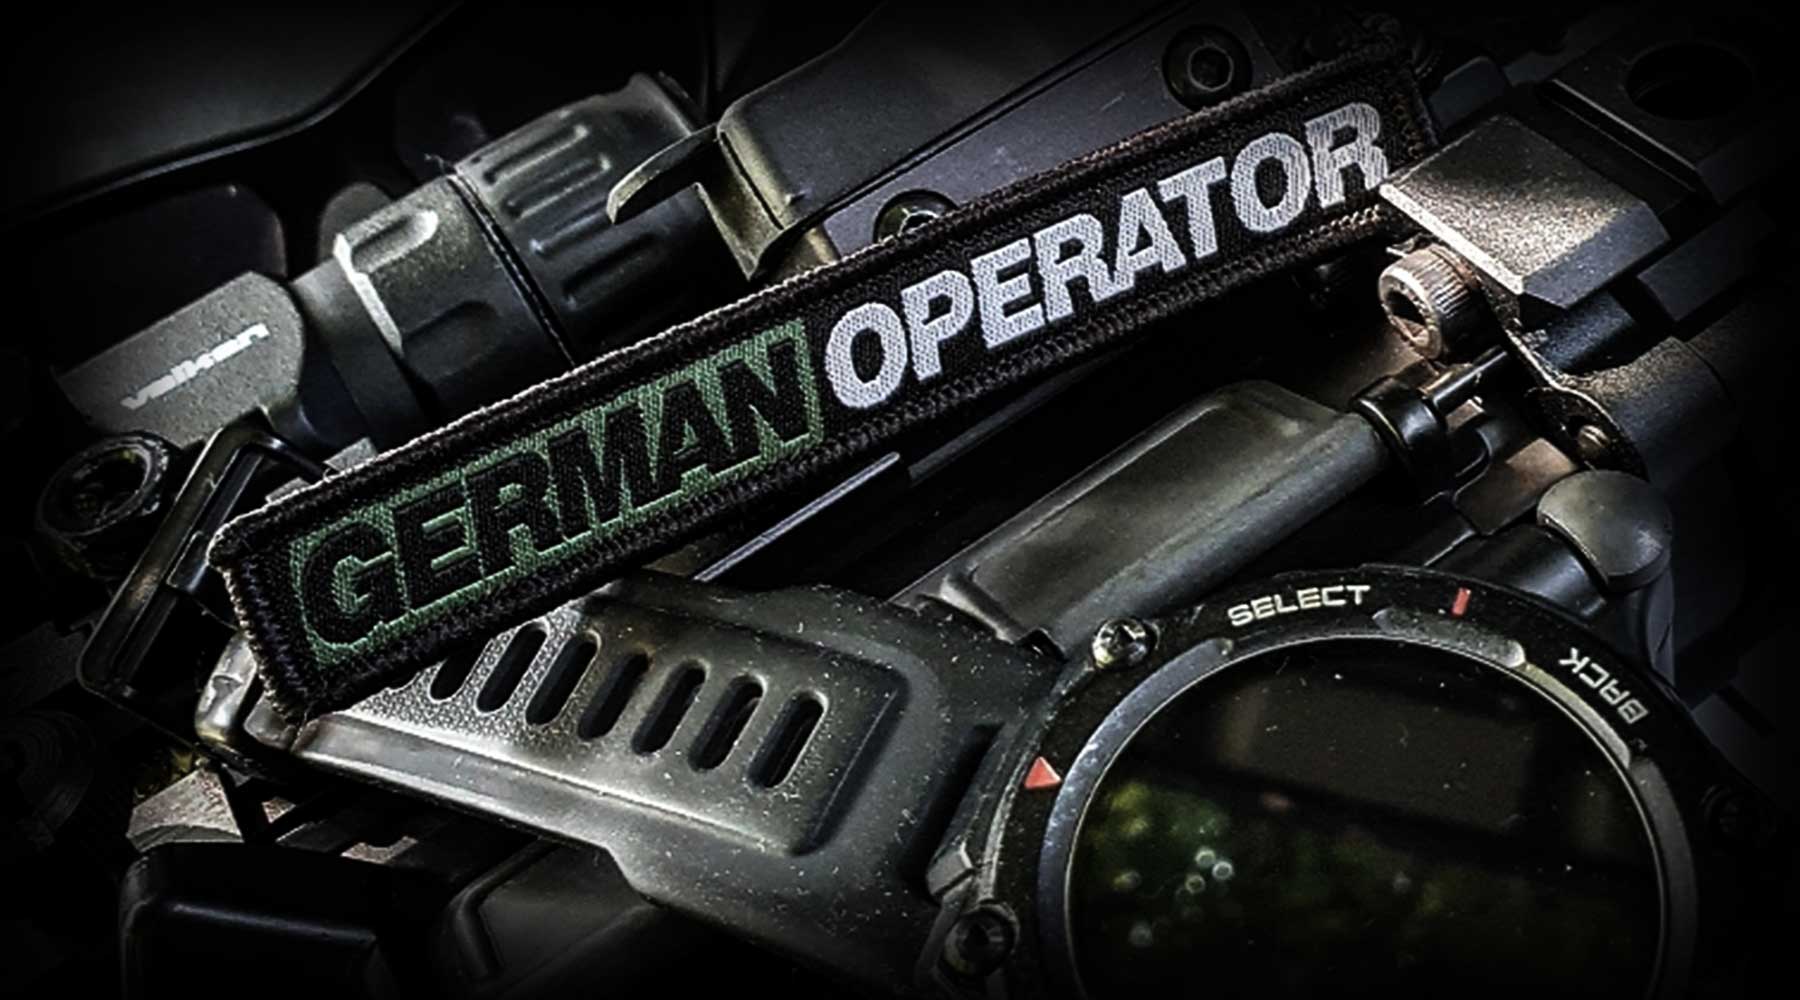 German Operator Merch